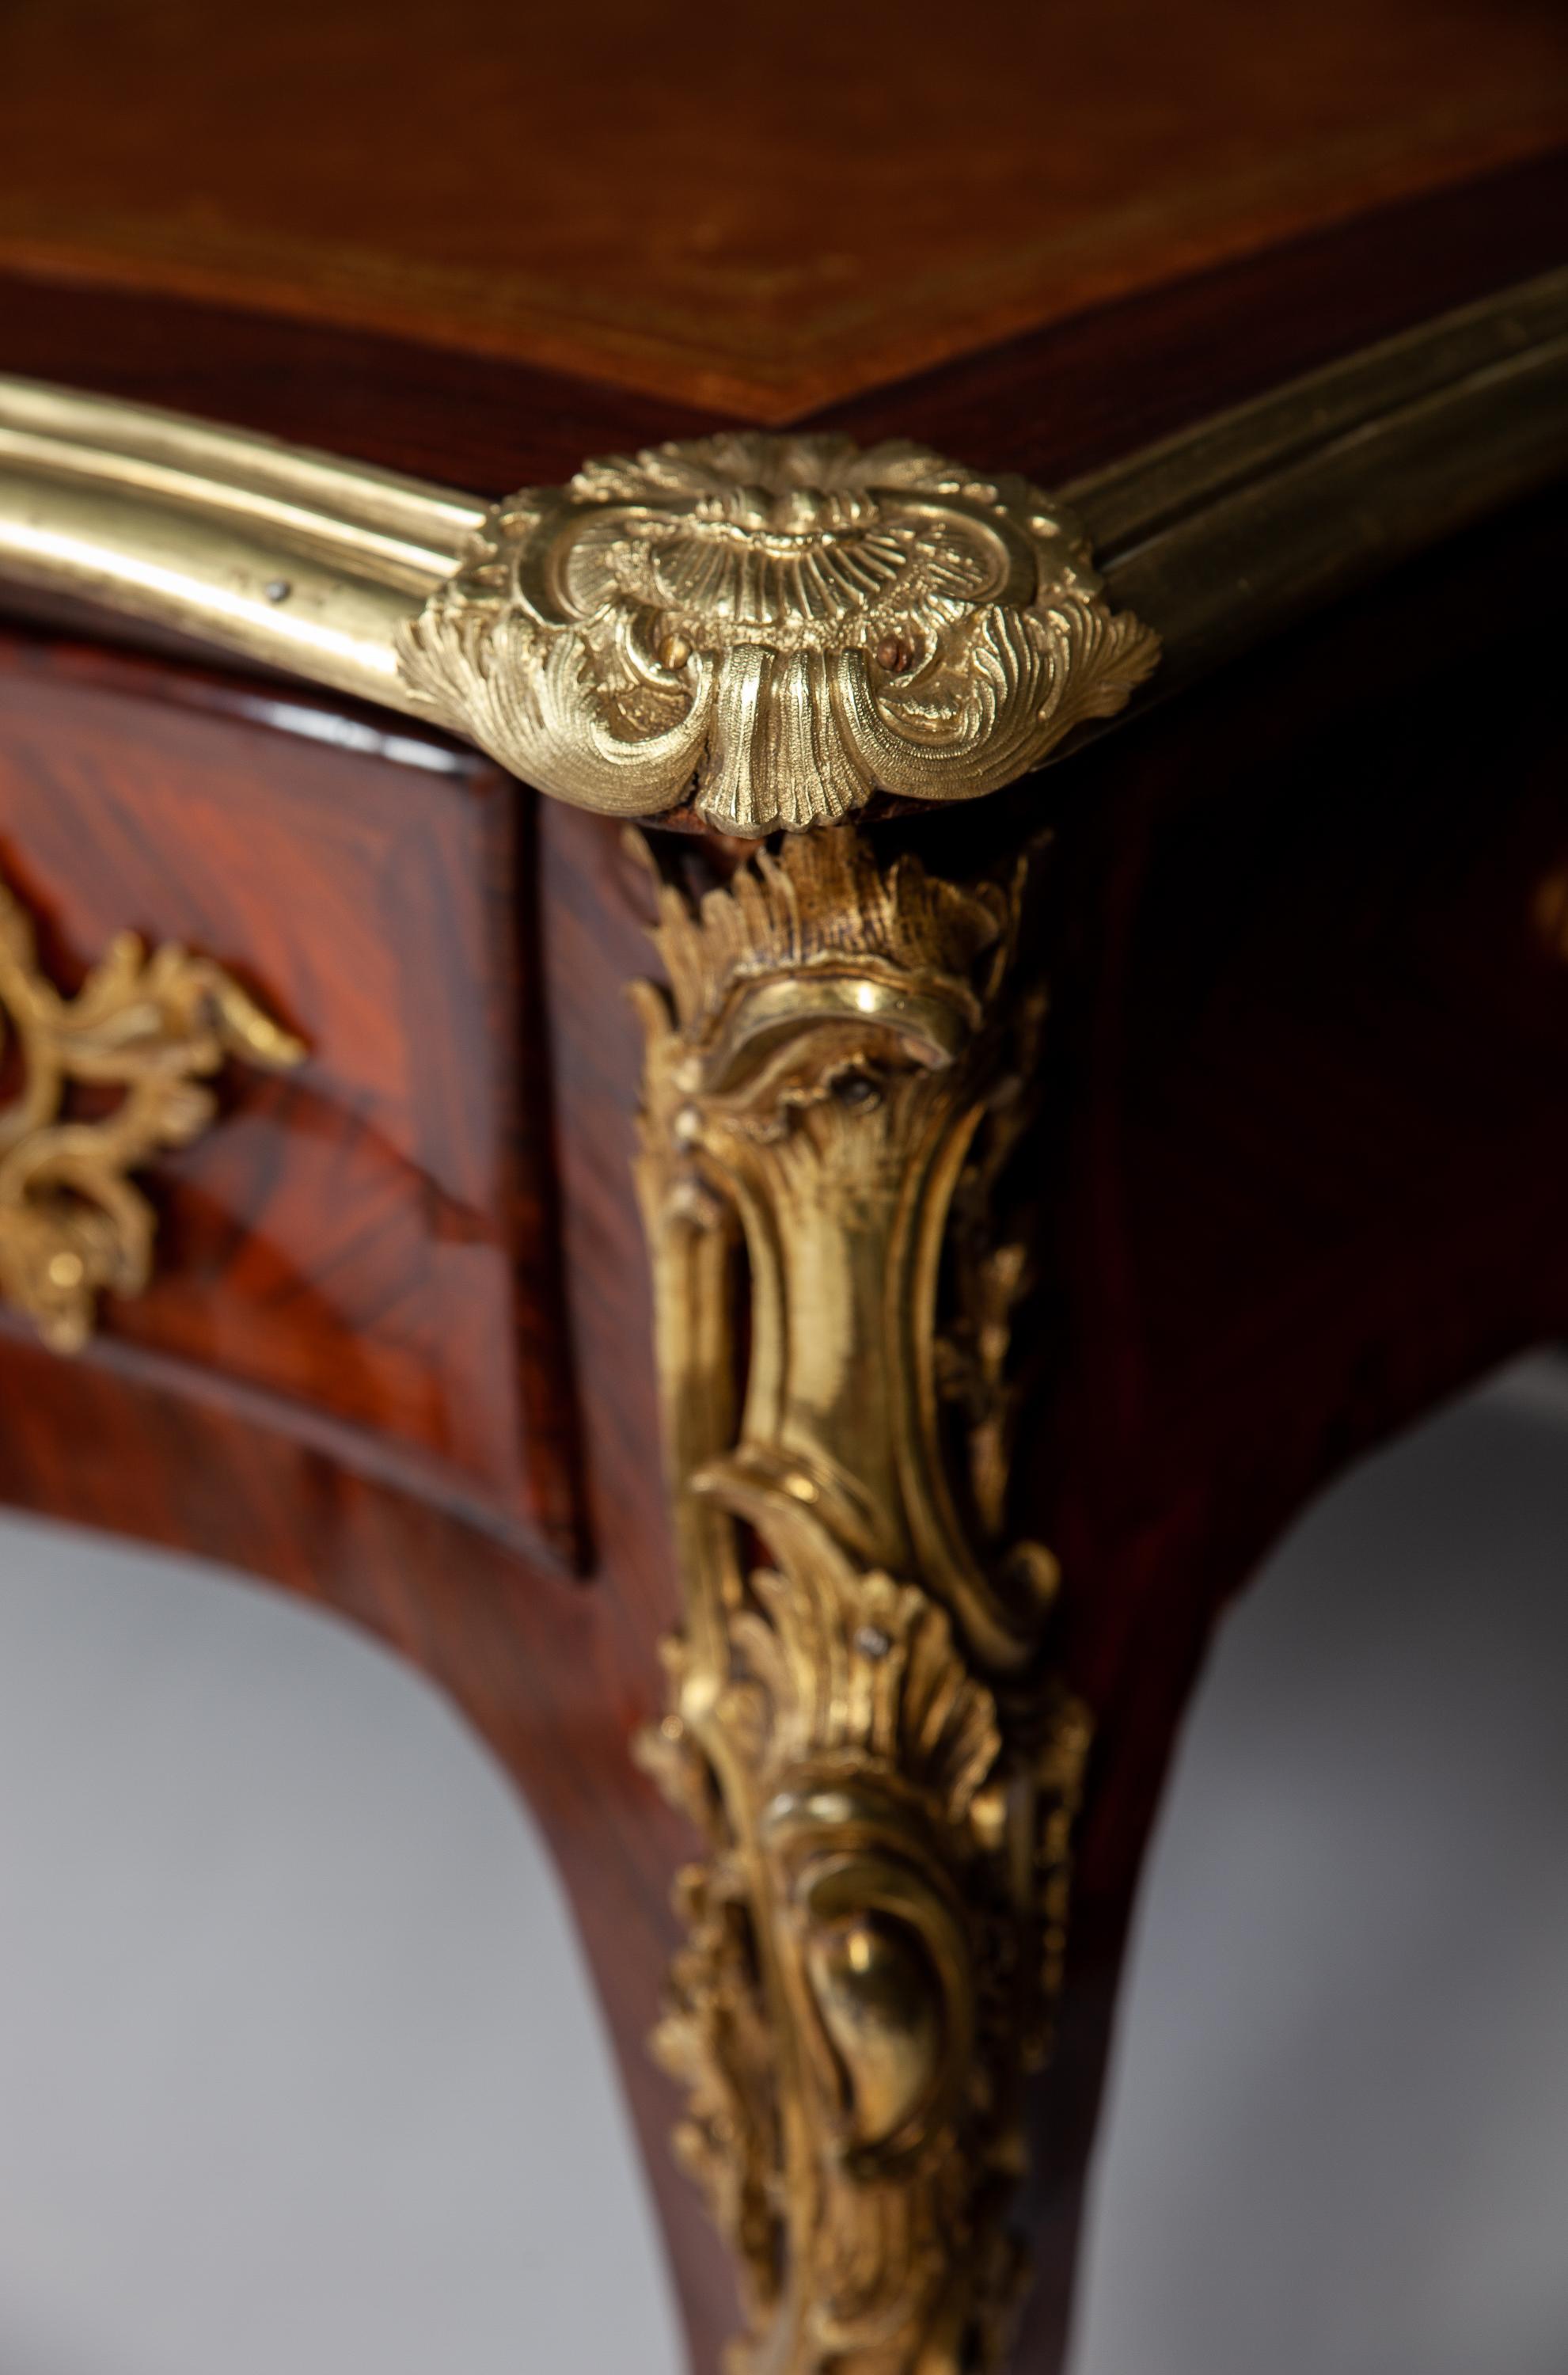 Mid-18th Century French 18th Century Louis XV Kingwood Gilt-Bronze Mounted  Bureau Plat Desk 1750